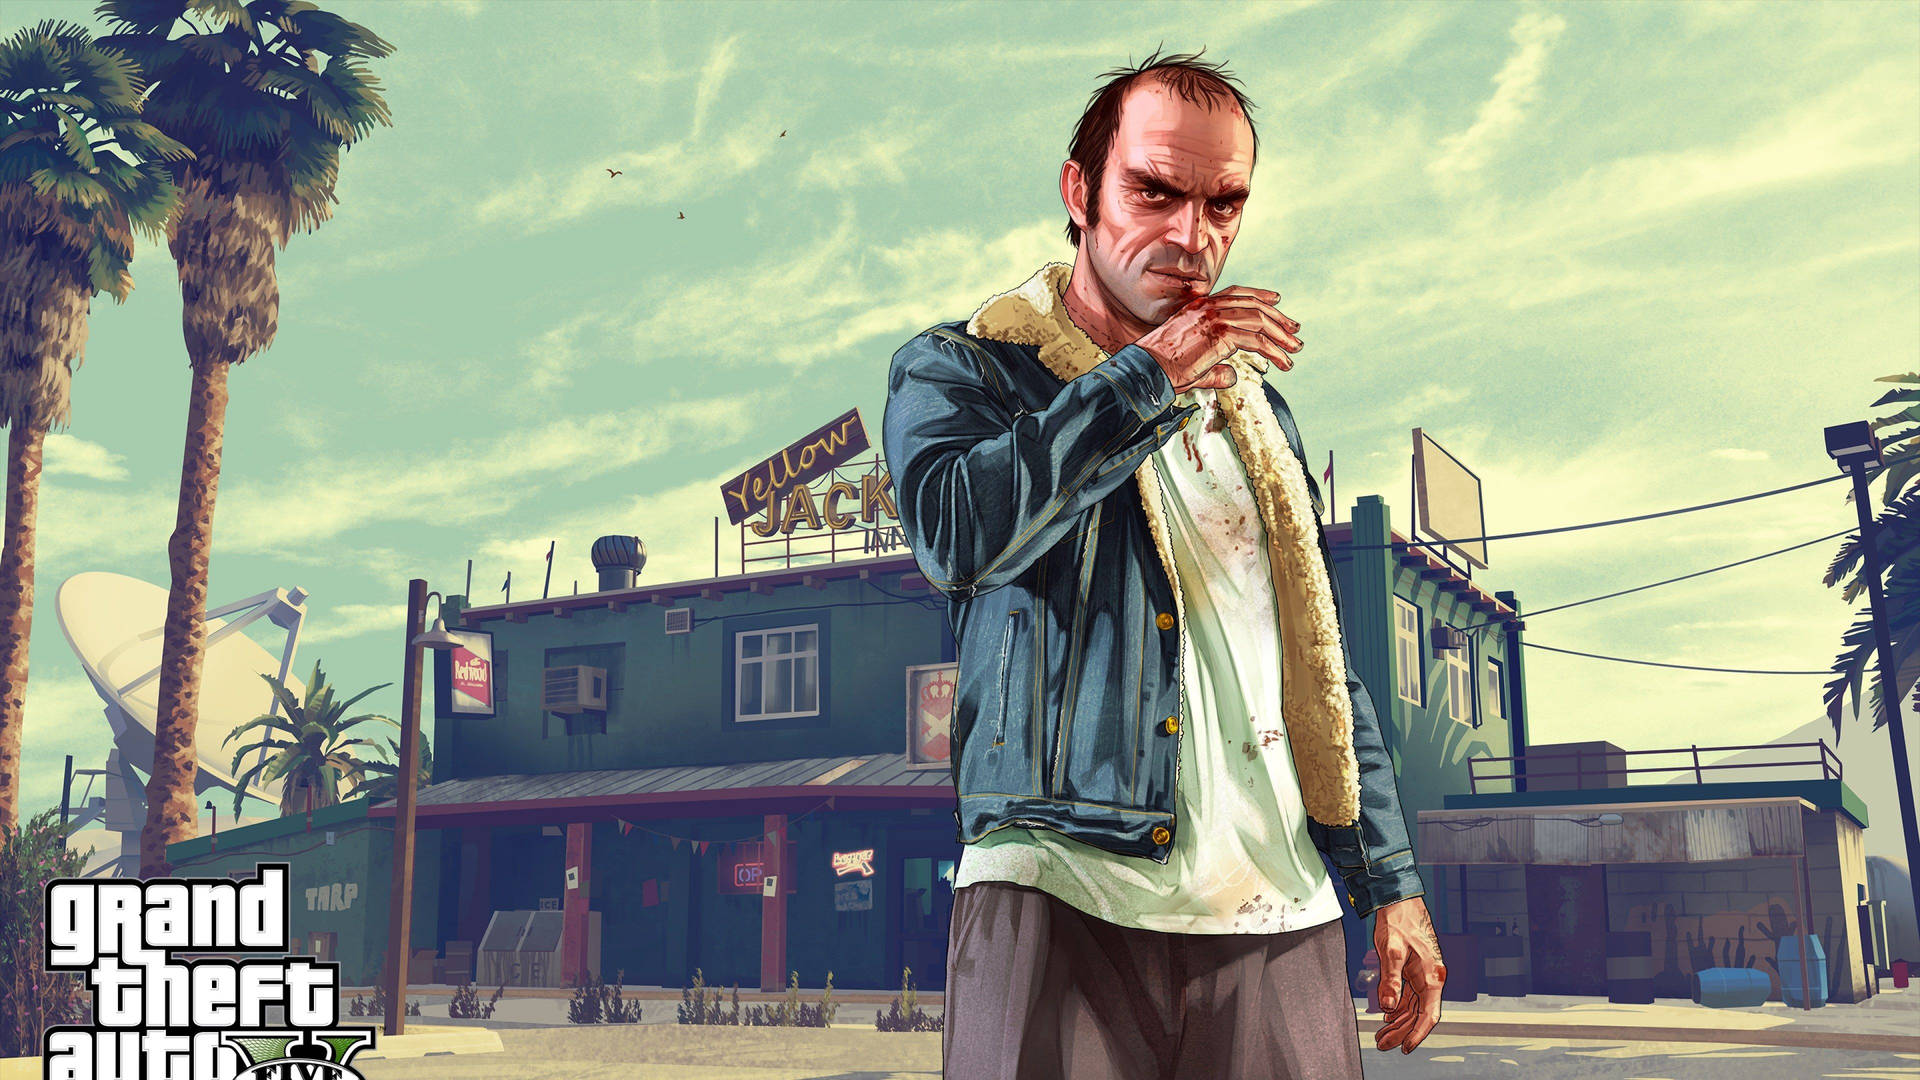 Grand Theft Auto V (GTA 5) wallpapers 1366x768 (laptop) desktop backgrounds